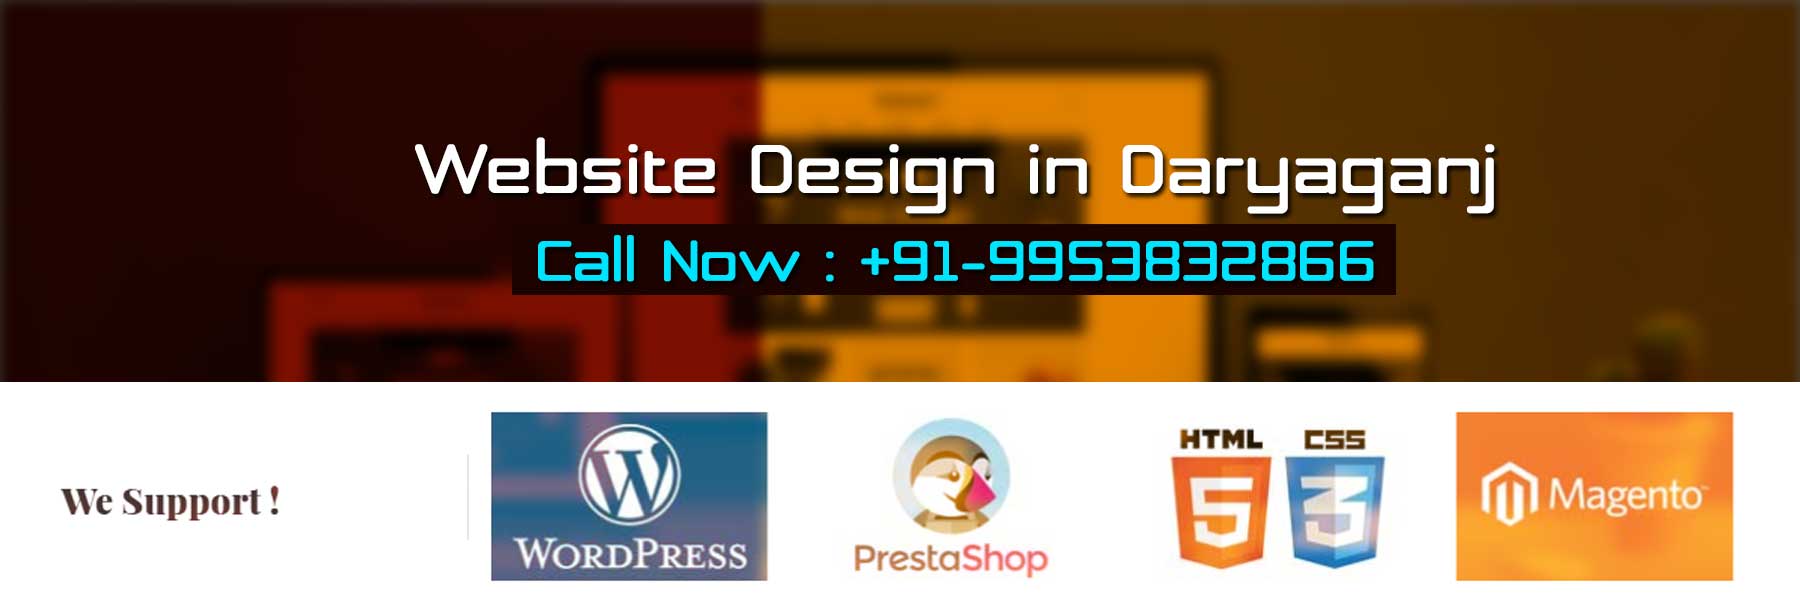 Website Design in Daryaganj